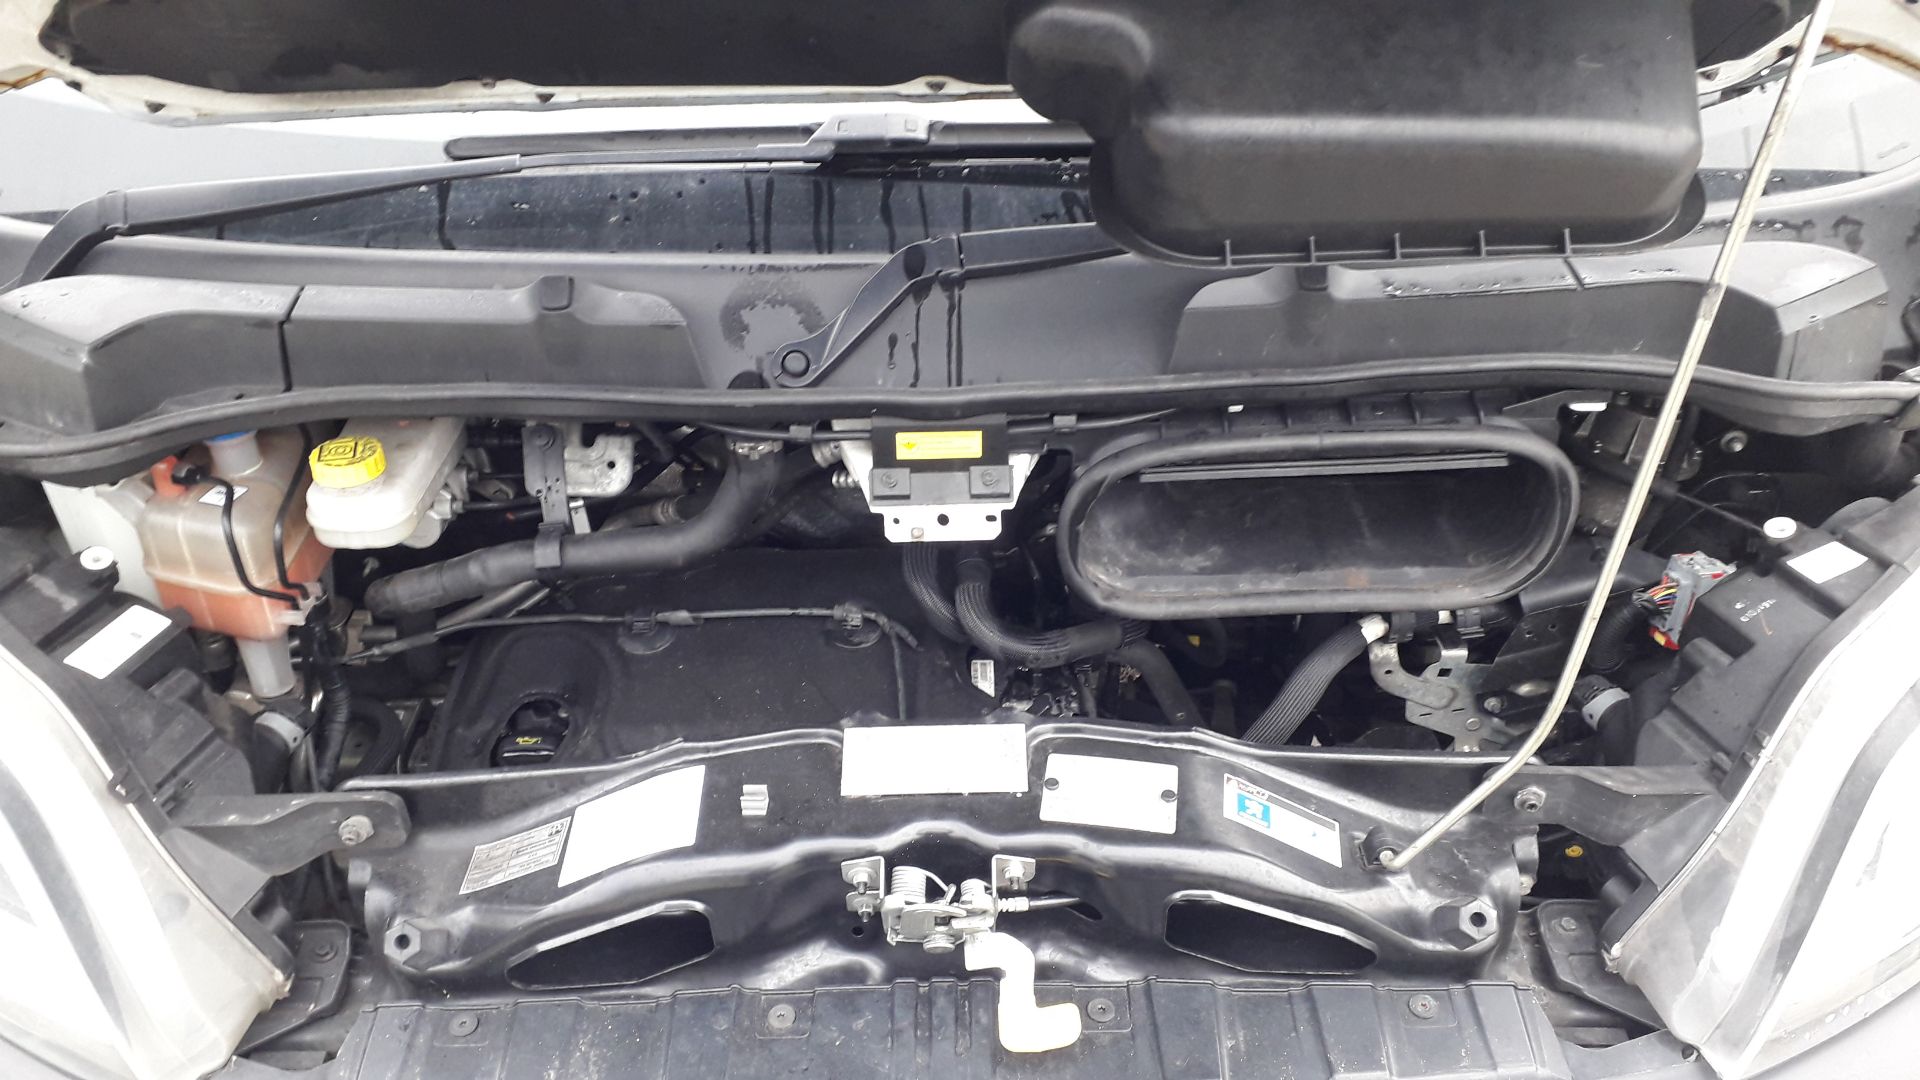 Peugeot Boxer 335 L3 Low Floor Luton Van Registration RX18 FZE, Odometer 72,819 Miles, 2 x Keys, V5 - Image 17 of 21